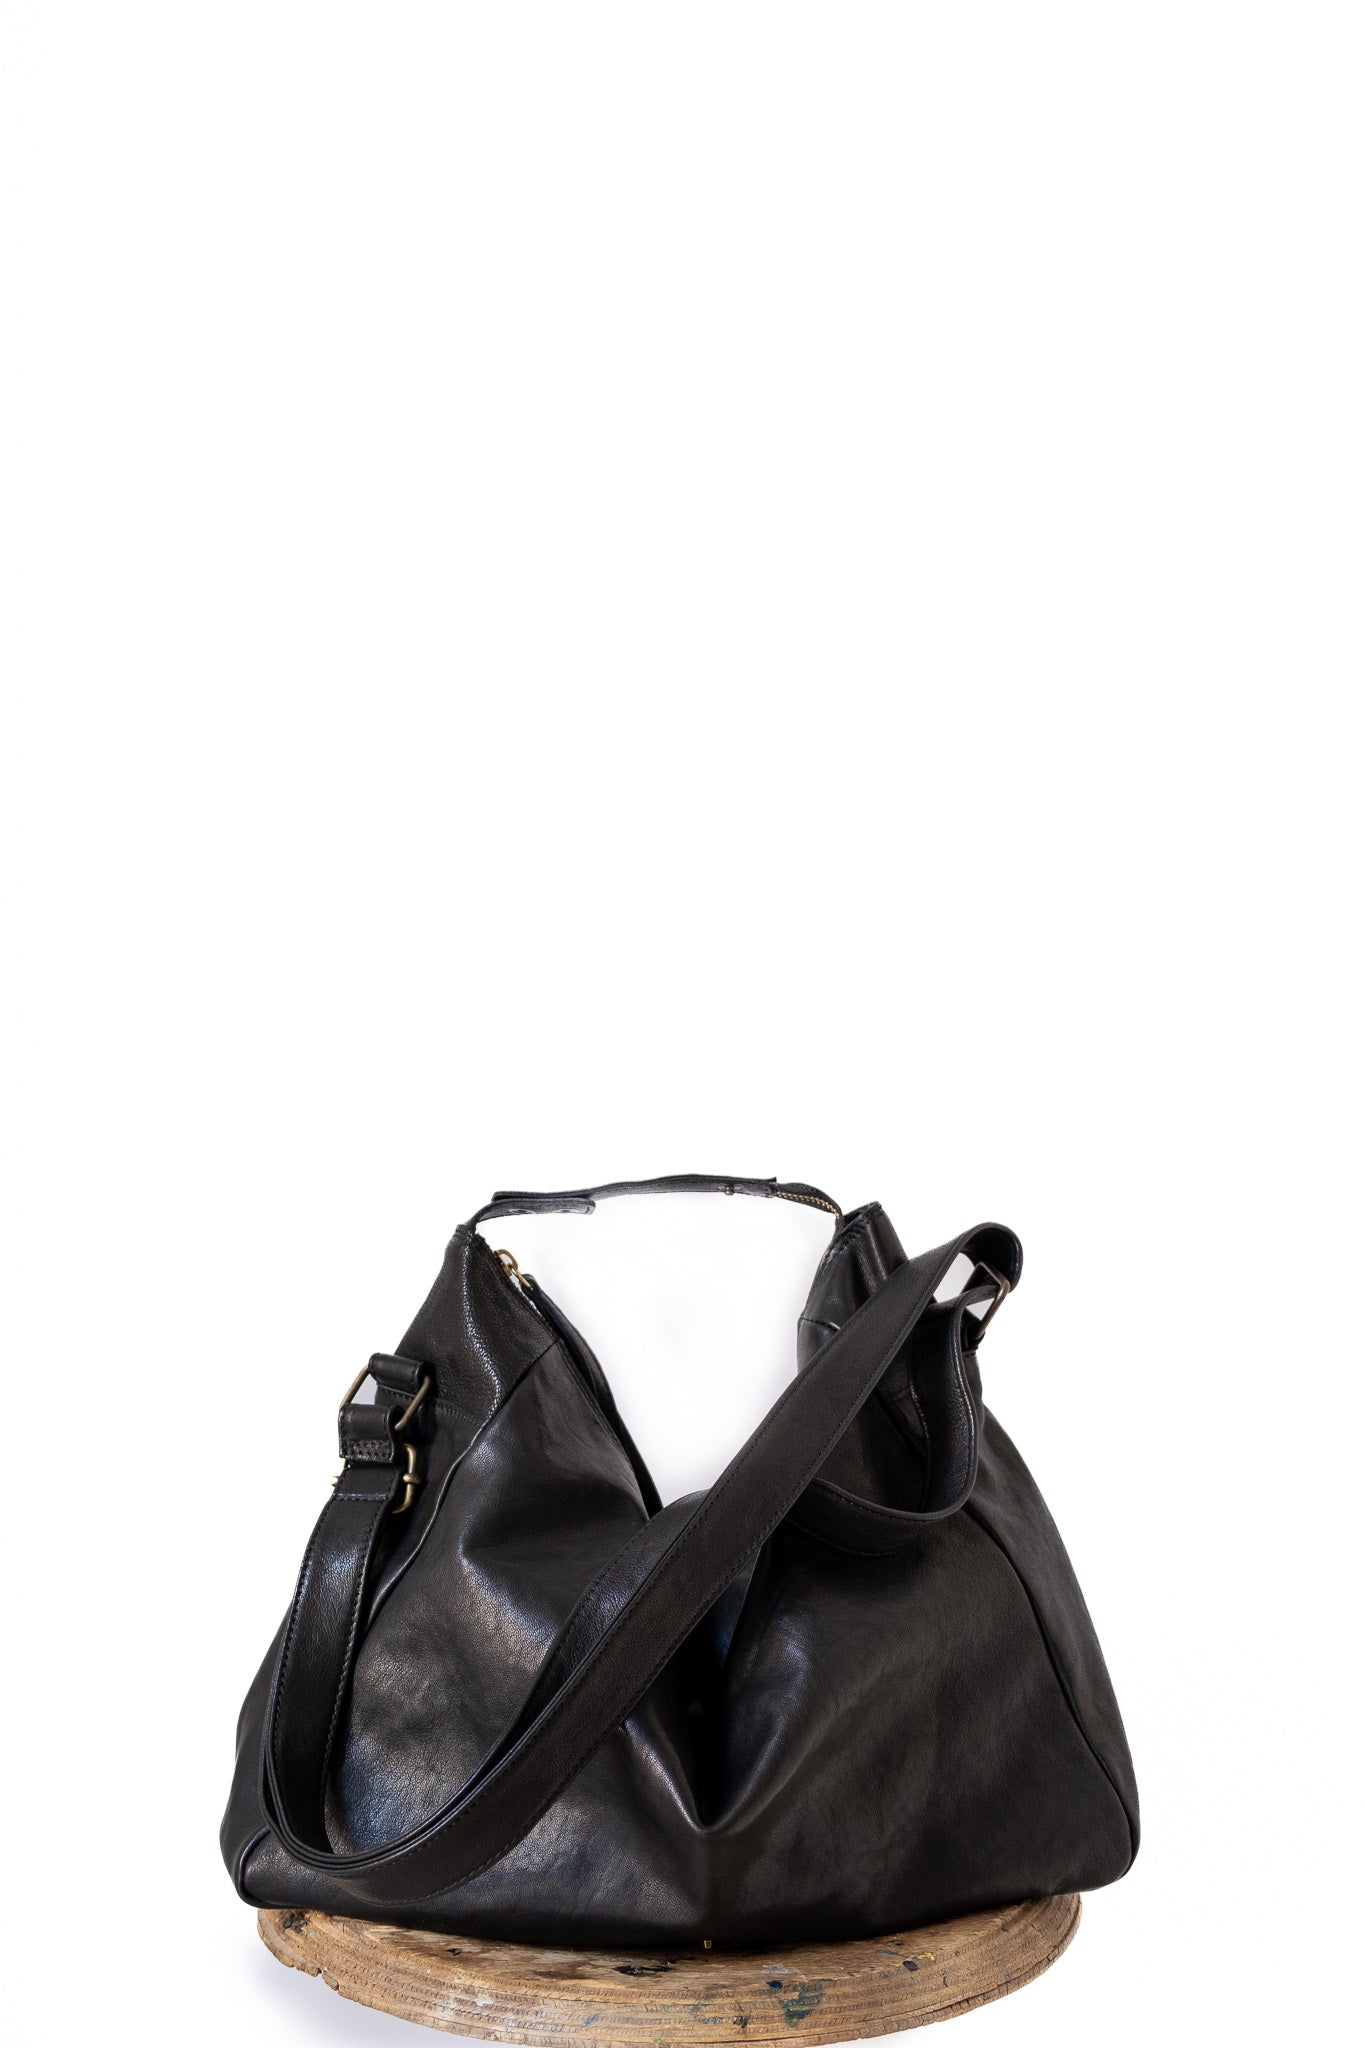 Chicca hobo bag in black nappa vegetable leather